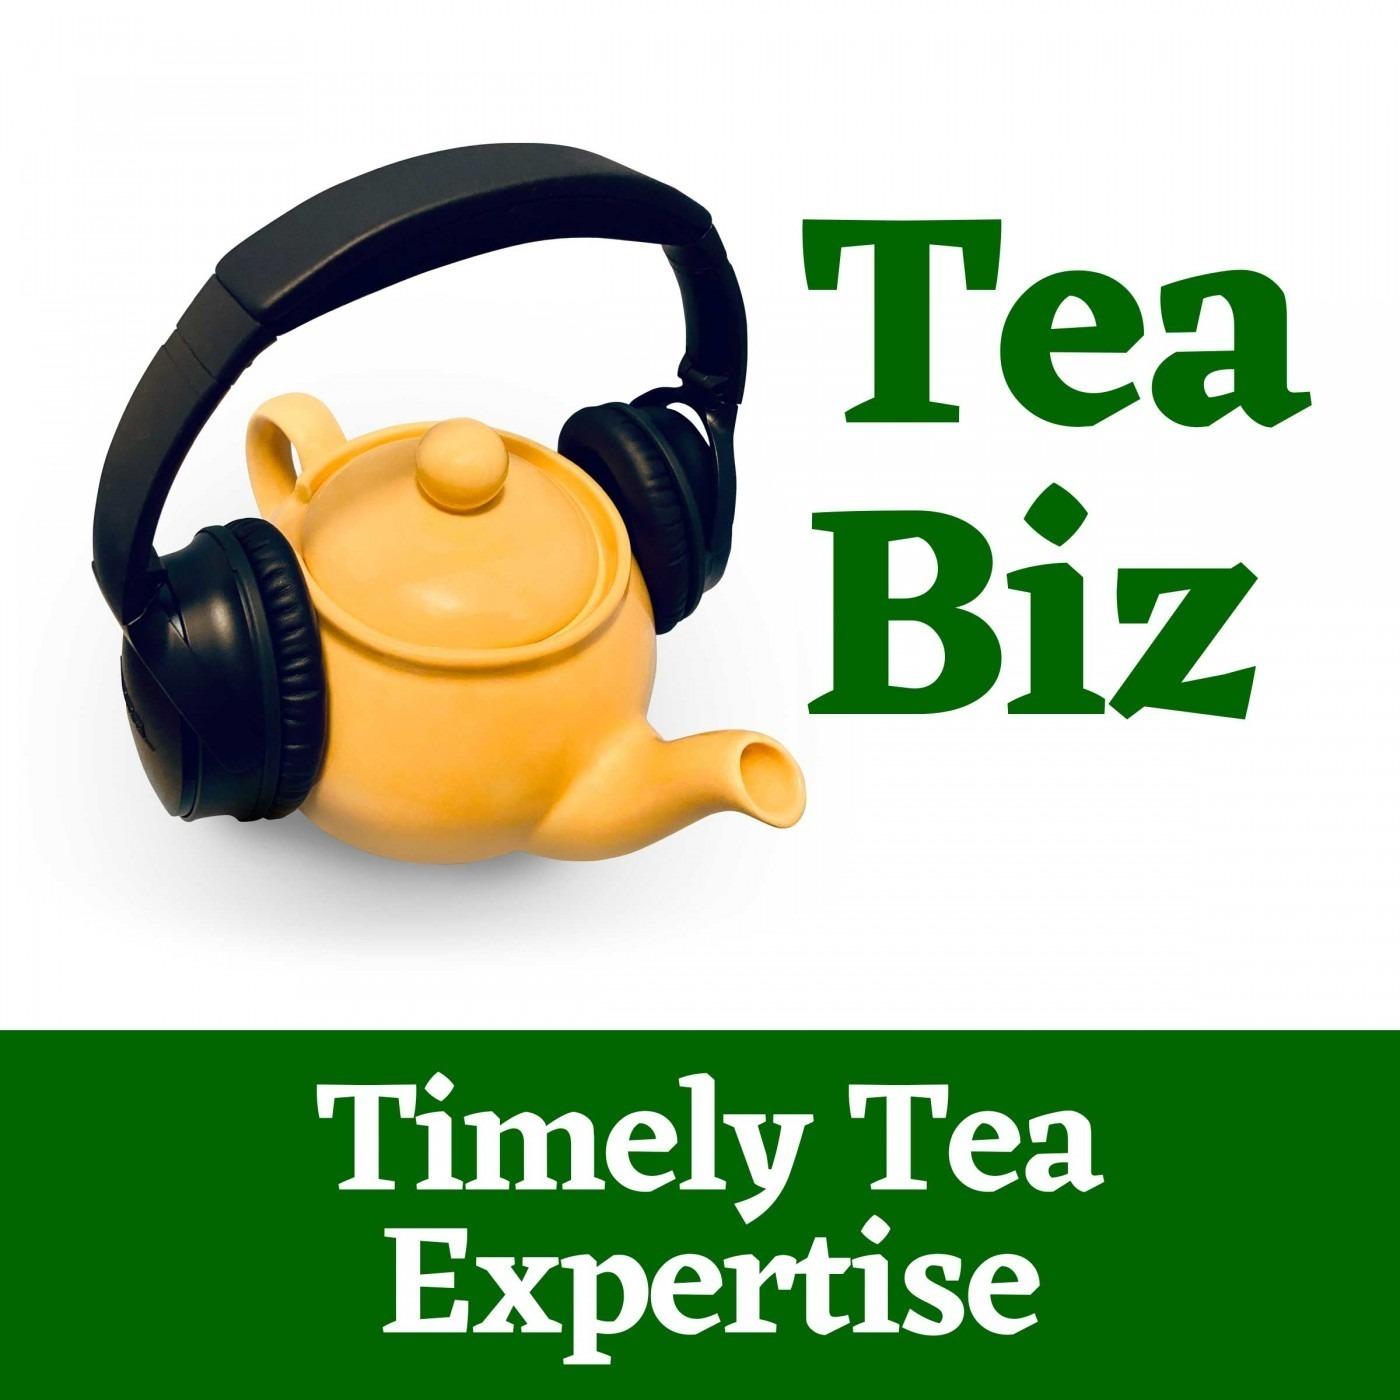 Clipper Tea launches organic gift box selection - Tea & Coffee Trade Journal